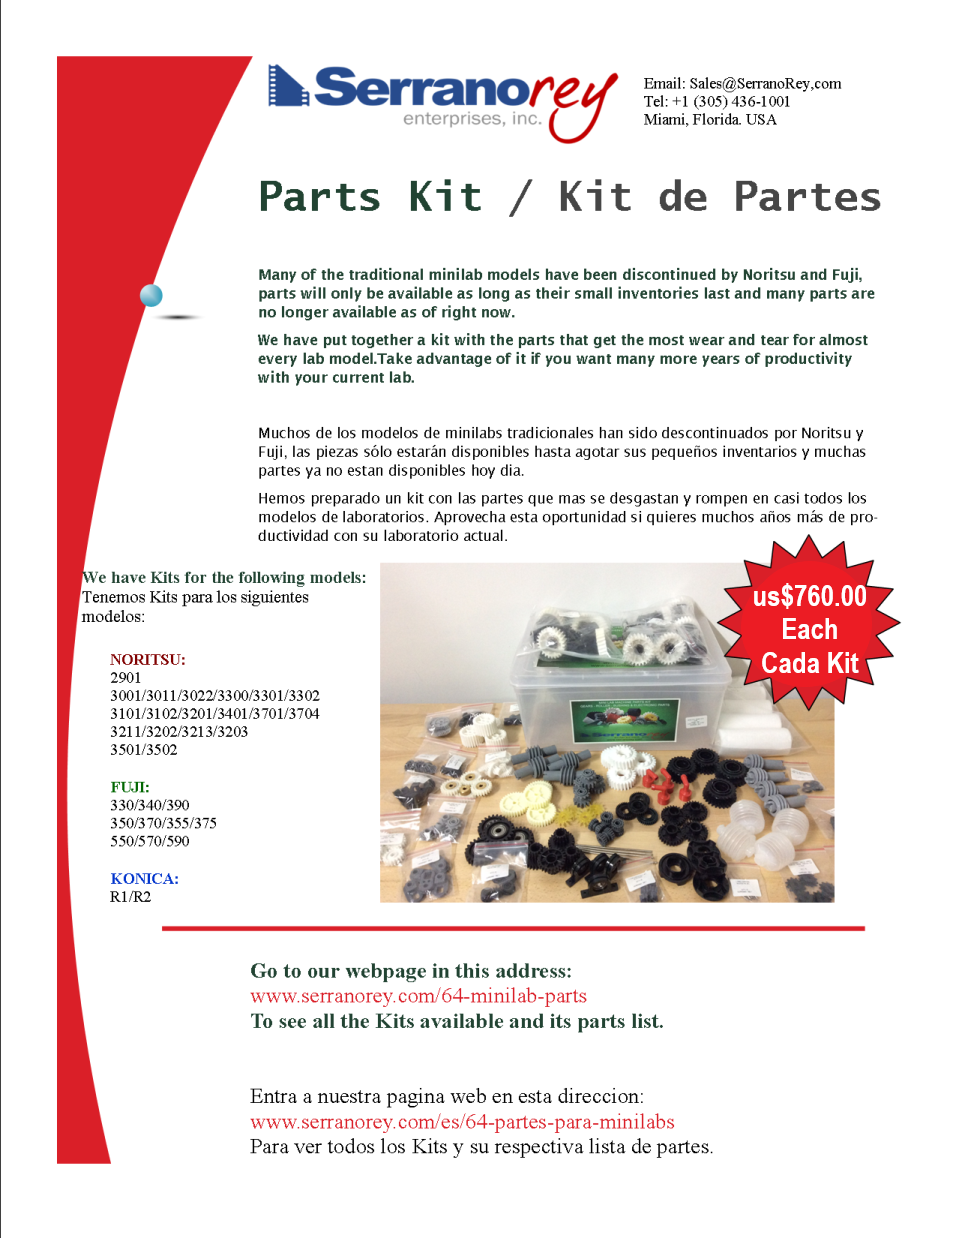 Parts Kit Brochure